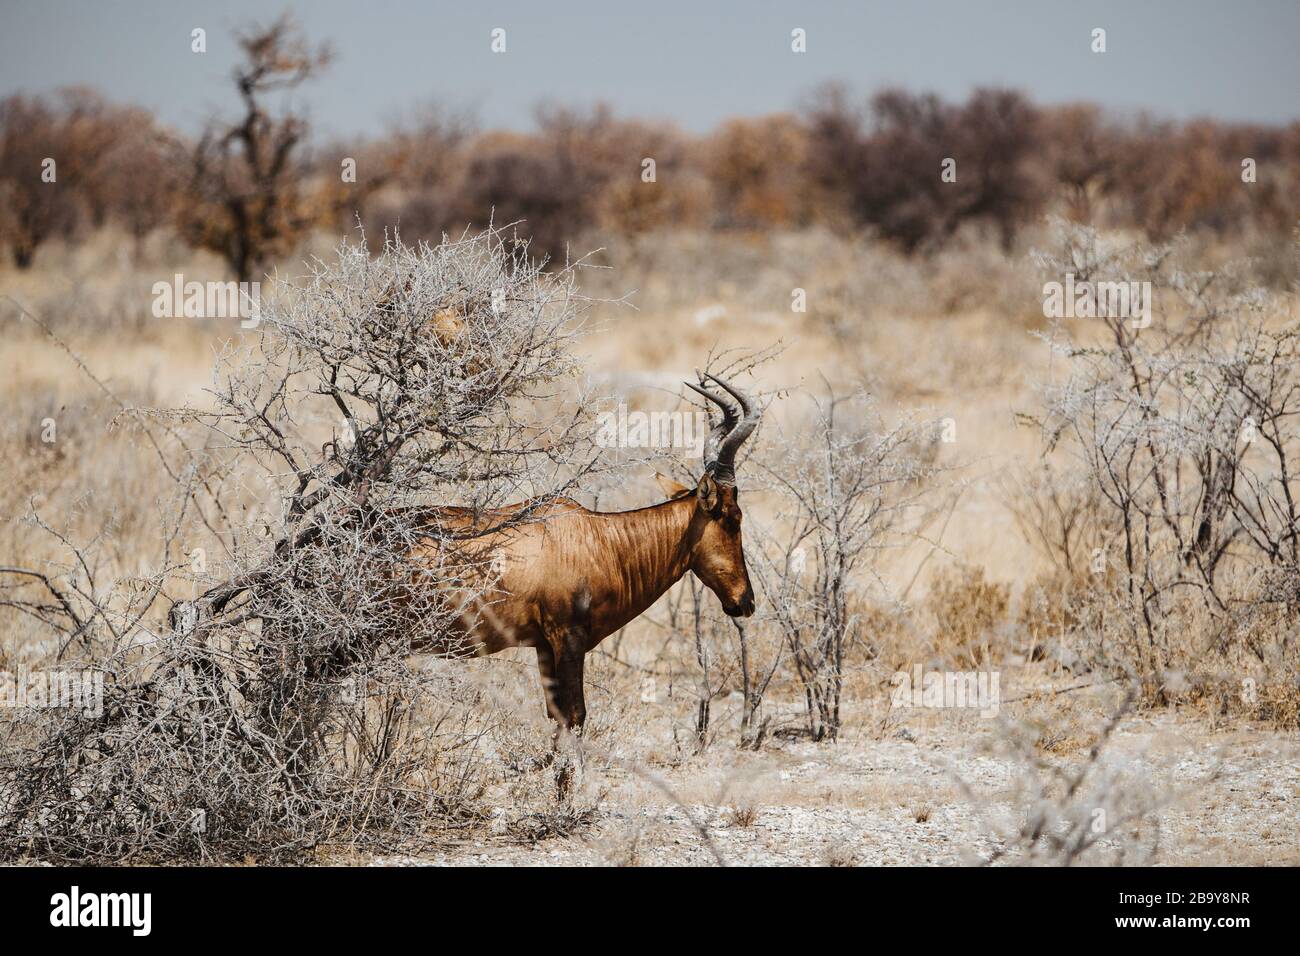 common eland, eland antilope, Taurotragus oryx, bull in desert and wild plants Stock Photo